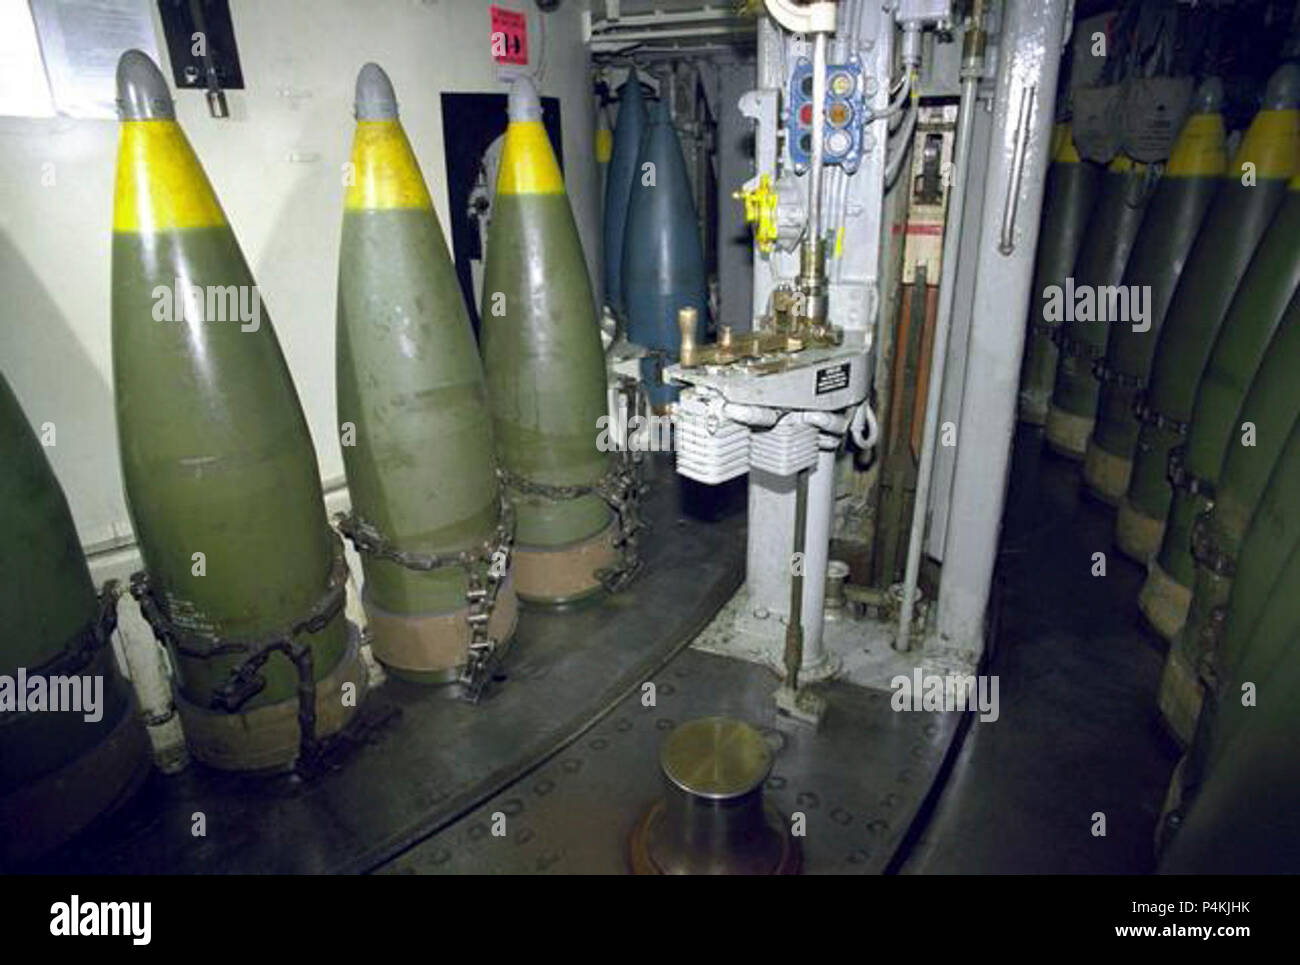 16-in Battleship Ammunition. Stock Photo